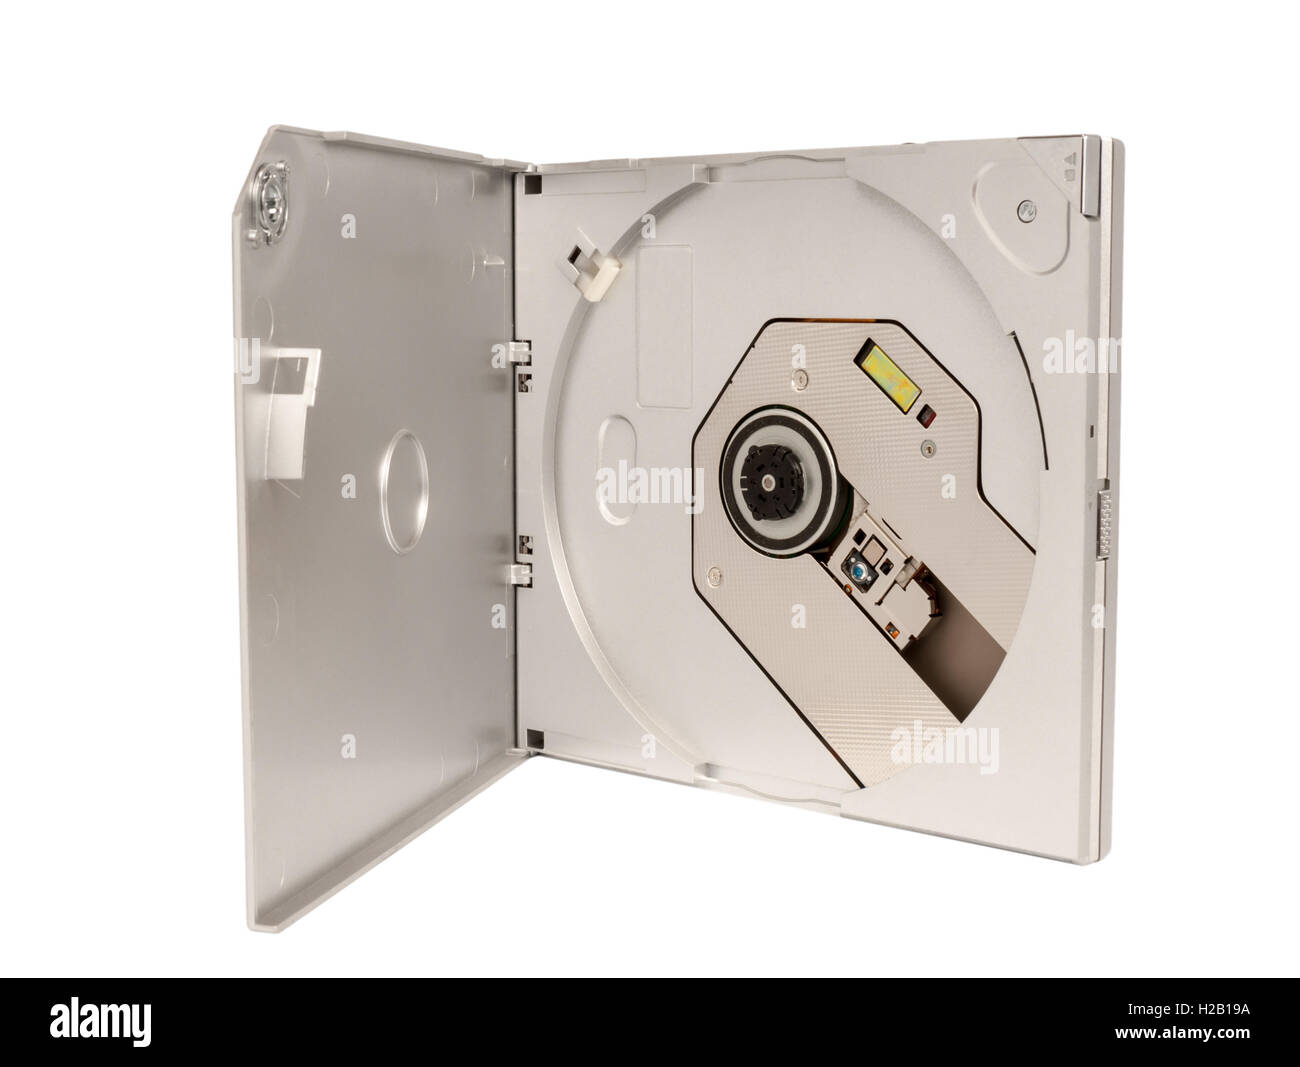 Electronic collection - Portable external slim CD DVD drive Electronic collection - Portable external slim CD DVD drive Stock Photo